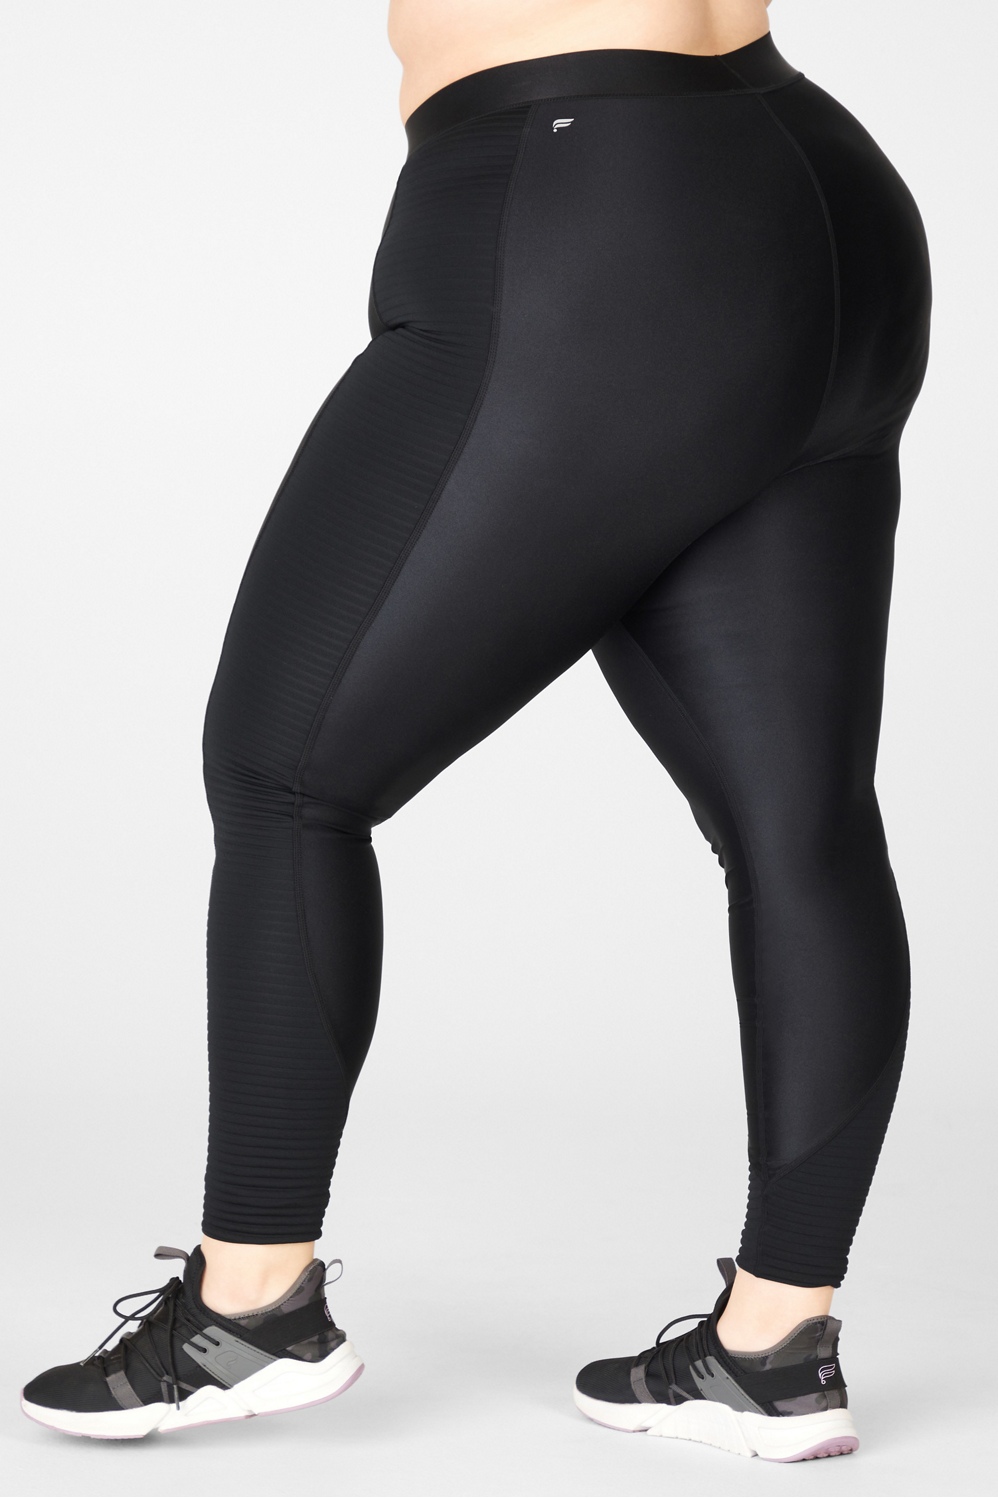 $108 FP Movement Women's Black Lurex Ultra High-Rise Leggings Size M/L